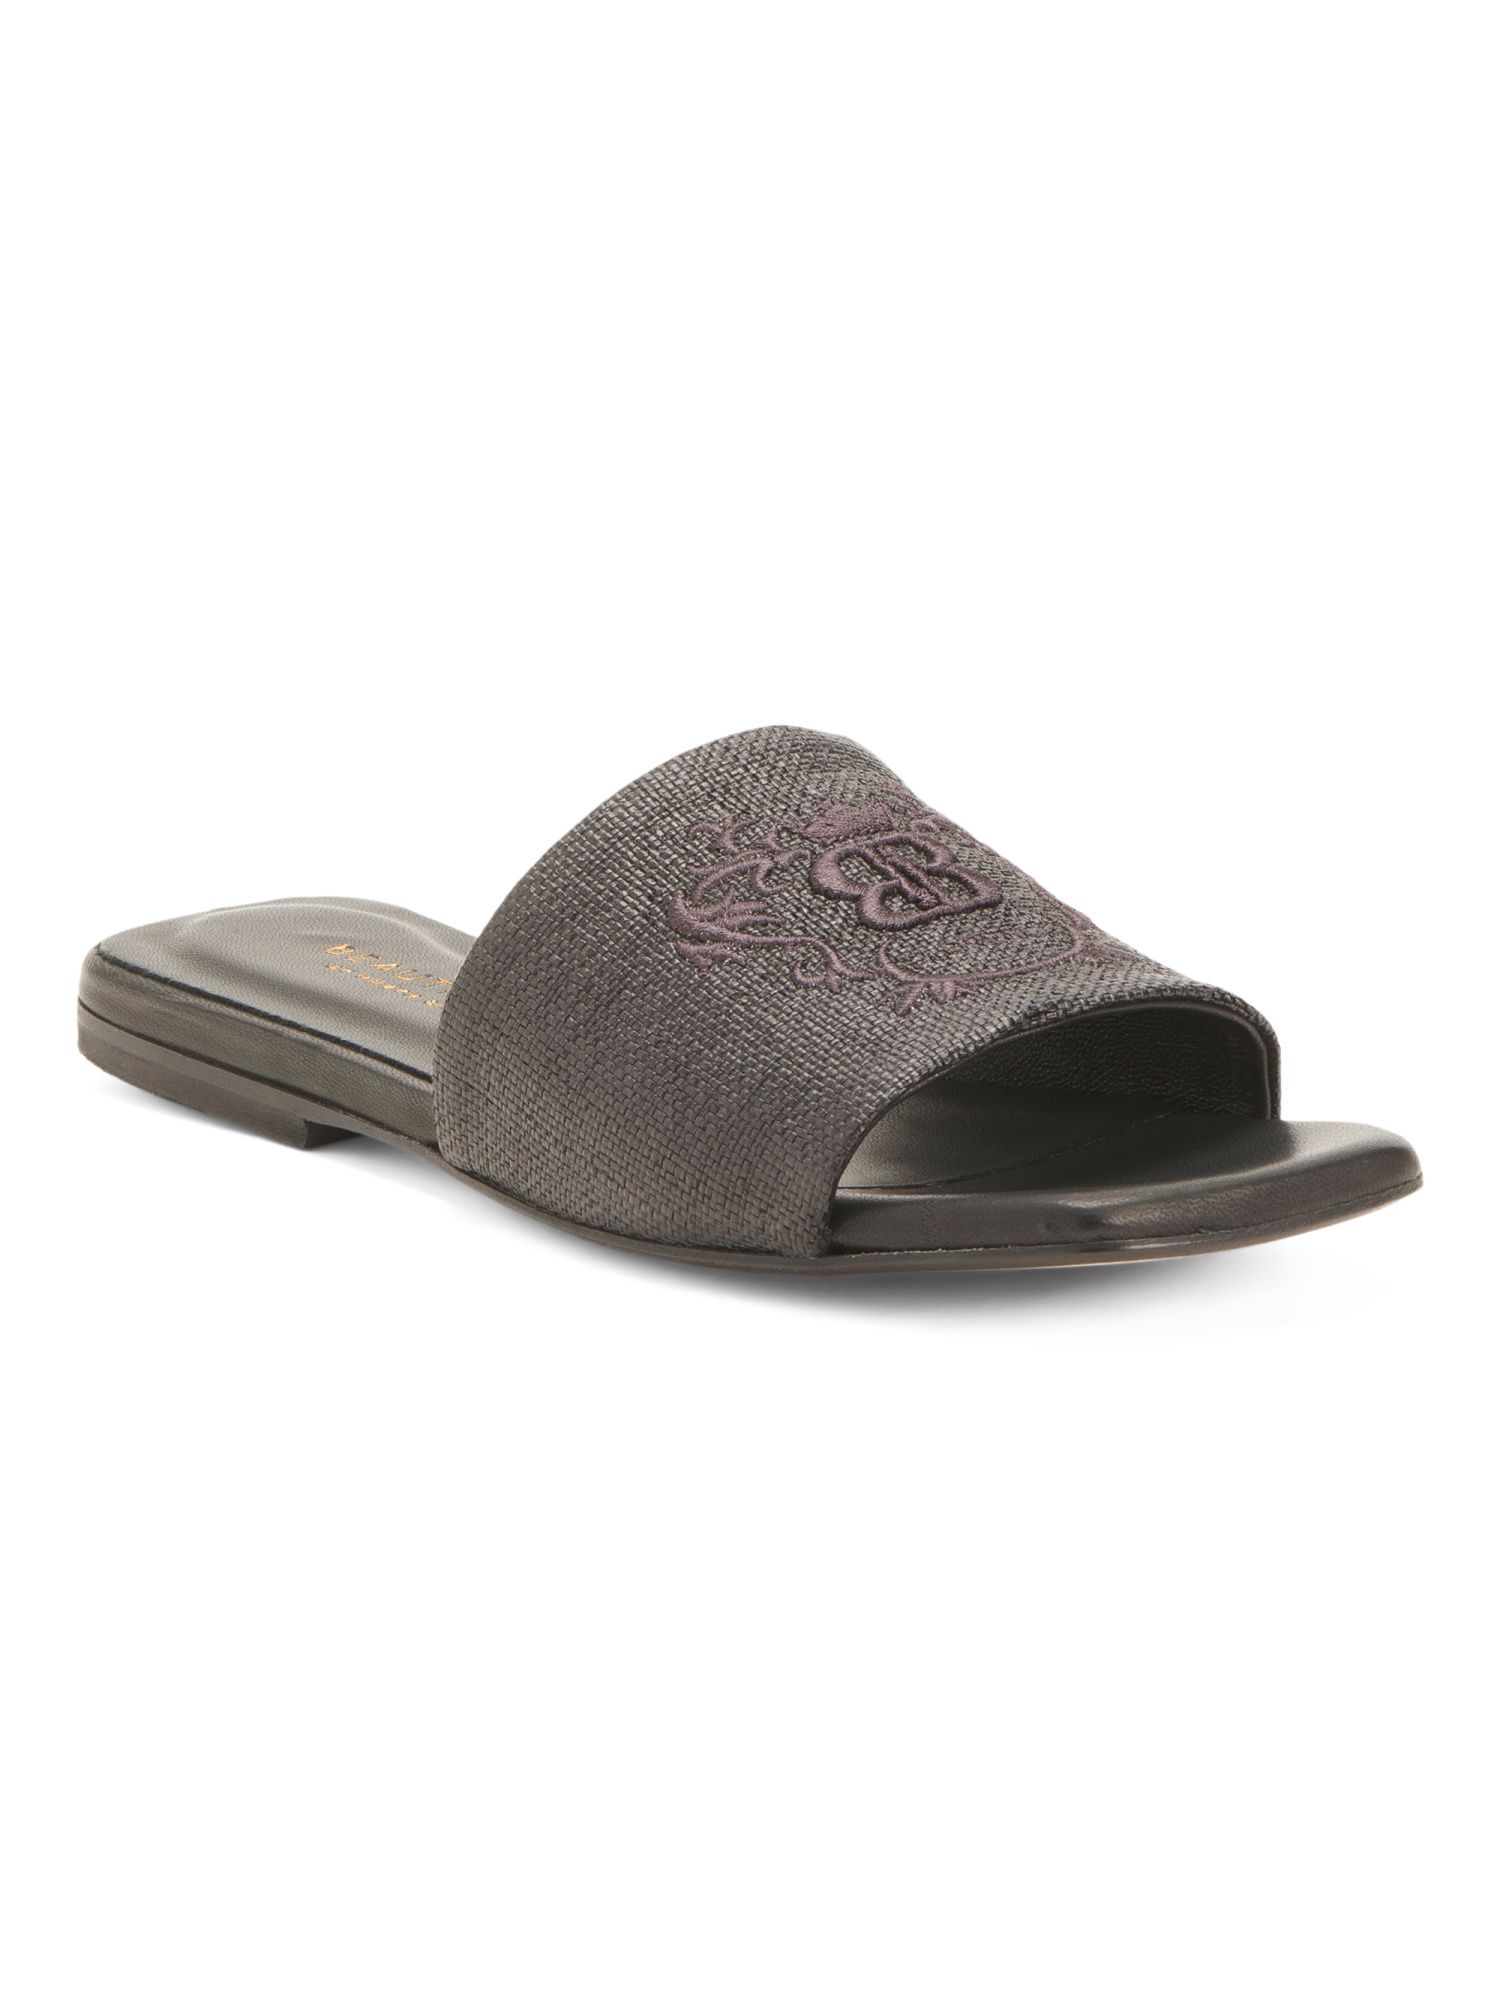 Made In Italy Gatana Flat Sandals | Women's Shoes | Marshalls | Marshalls